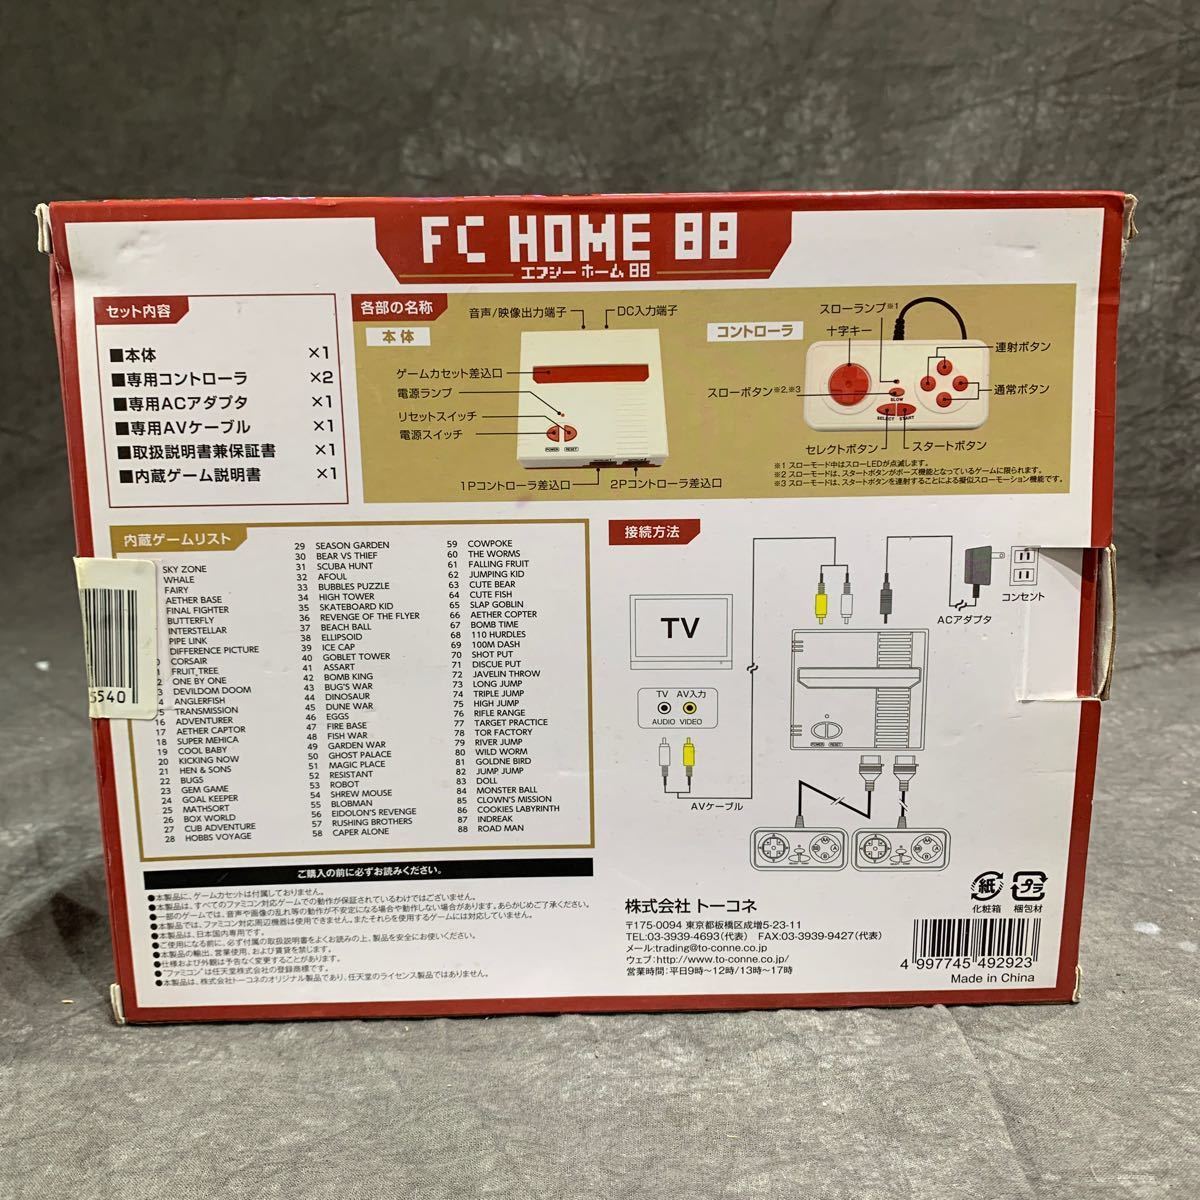  operation goods FC HOME 88efsi- Home 88 FC for game compatible Family computer Famicom game machine retro game nostalgia. game 